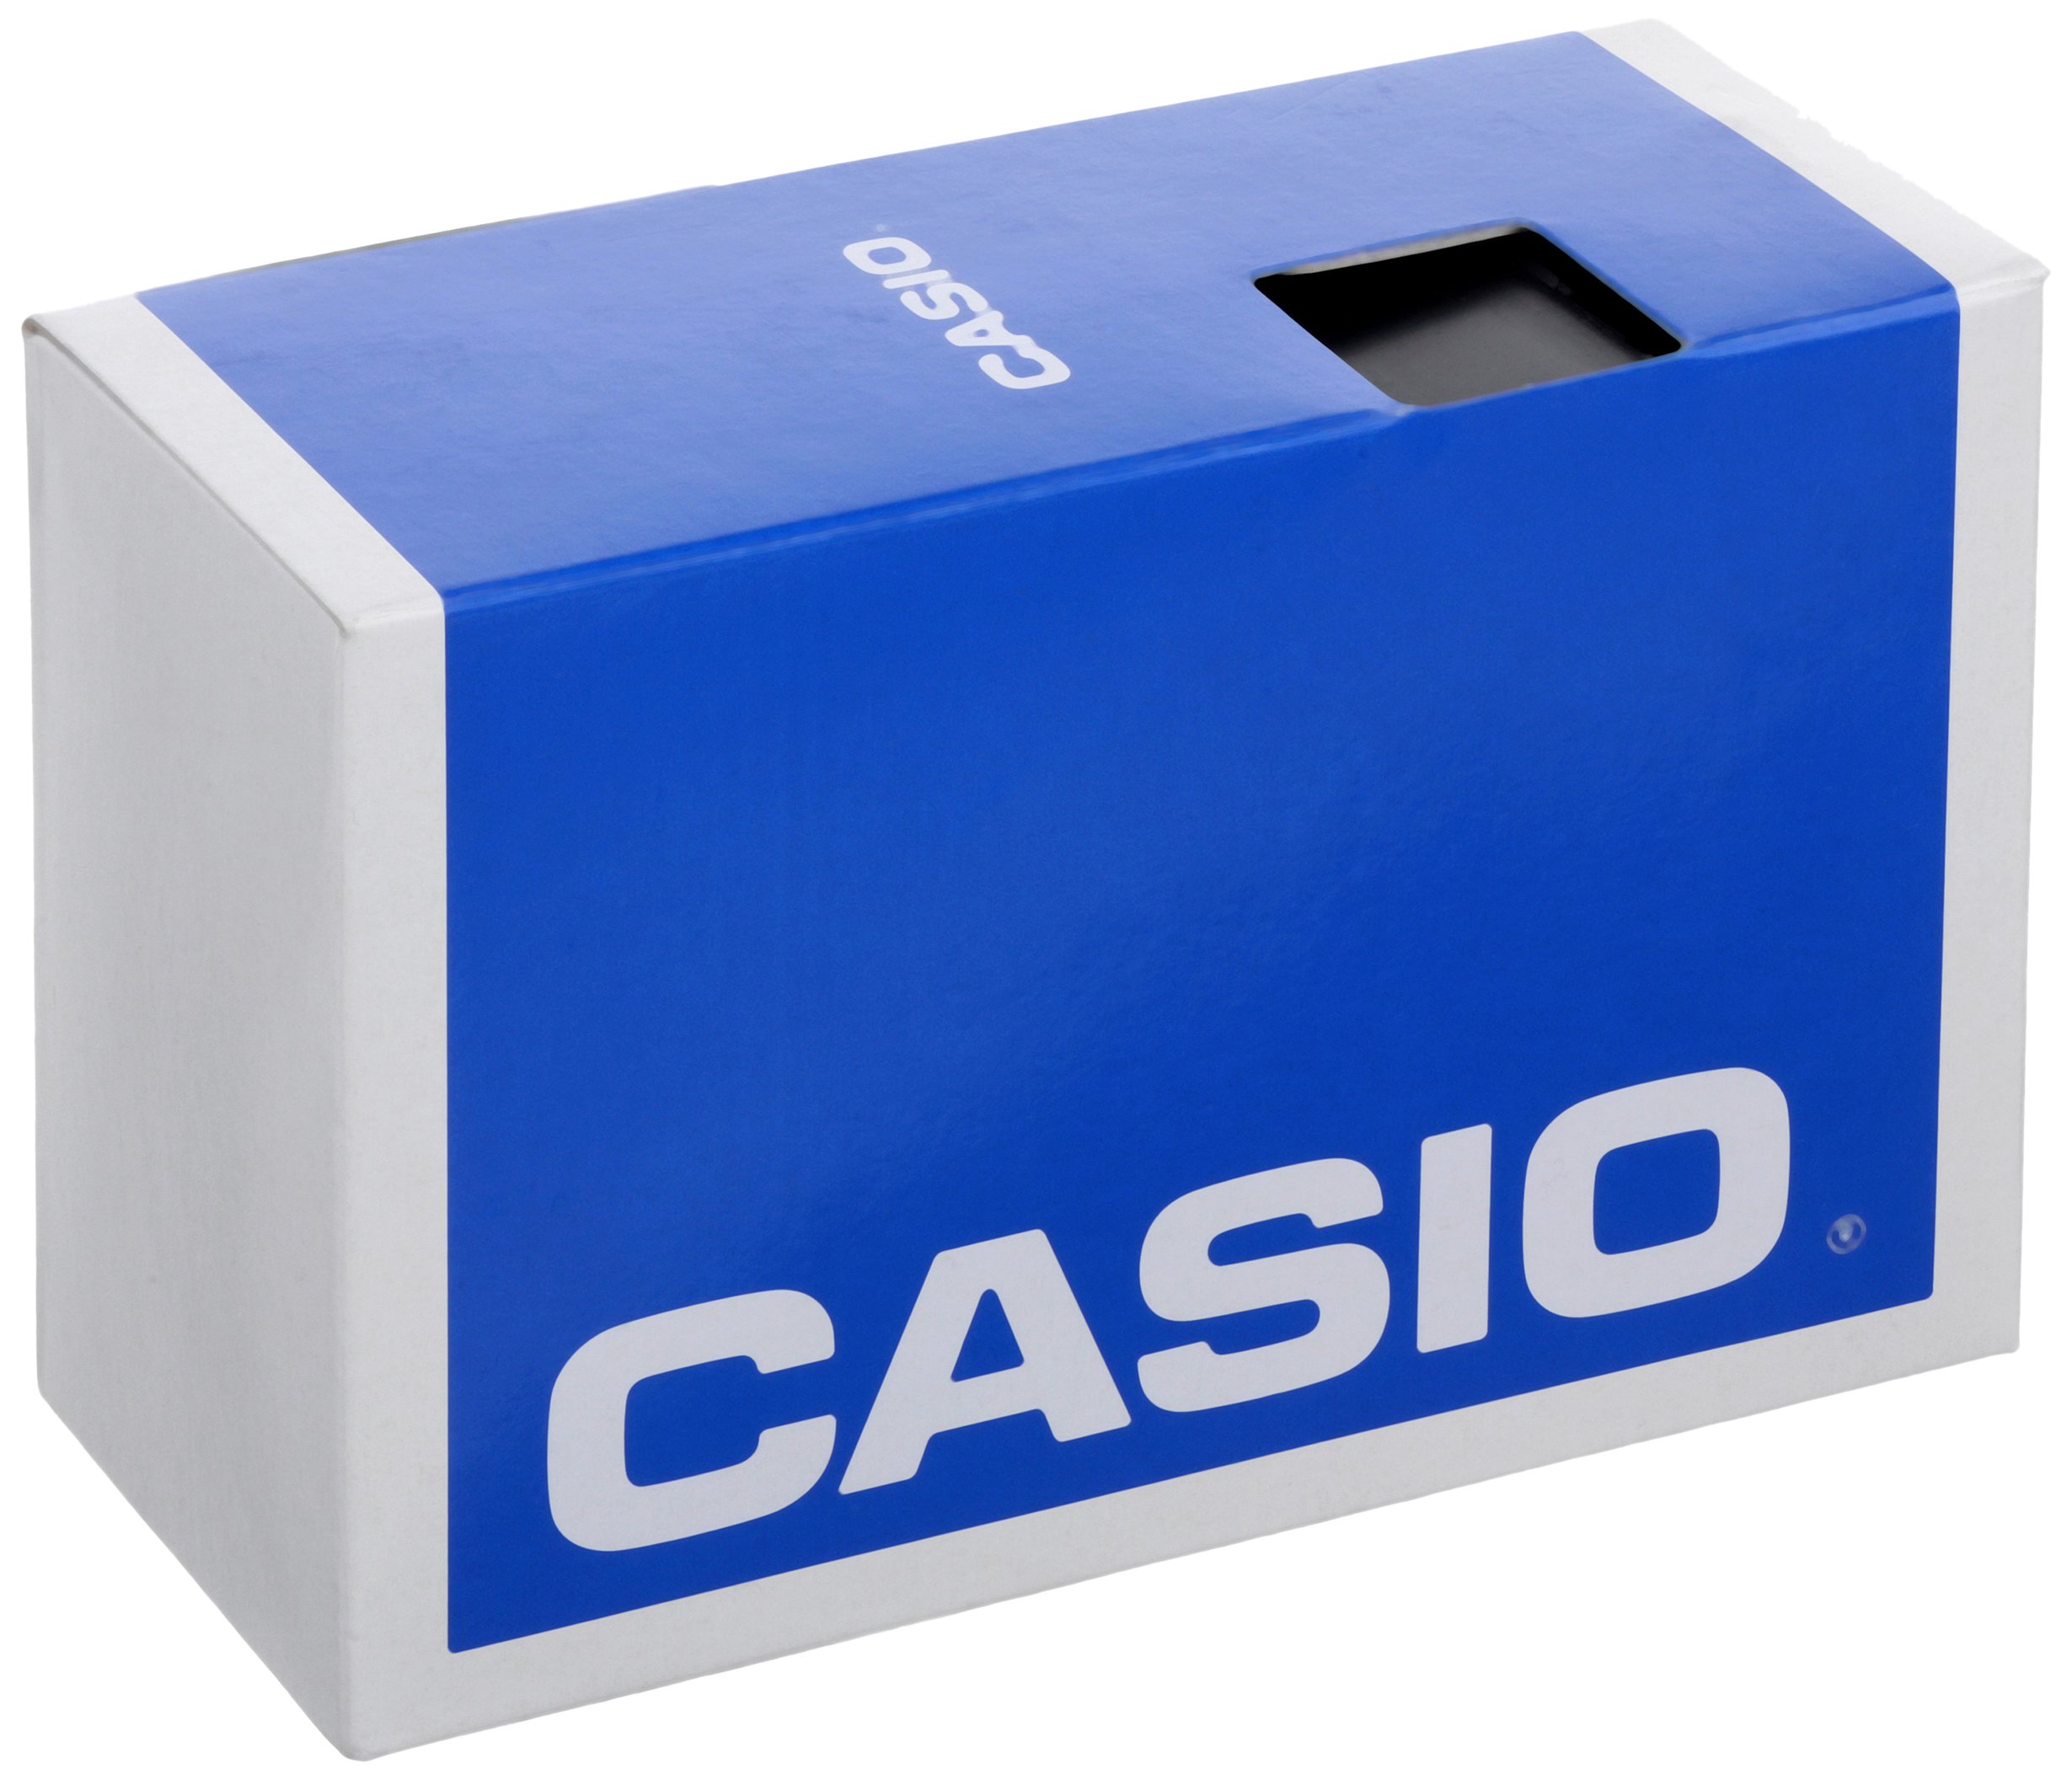 Casio Unisex MW-240-1EVCF Classic Analog Display Quartz Black Watch